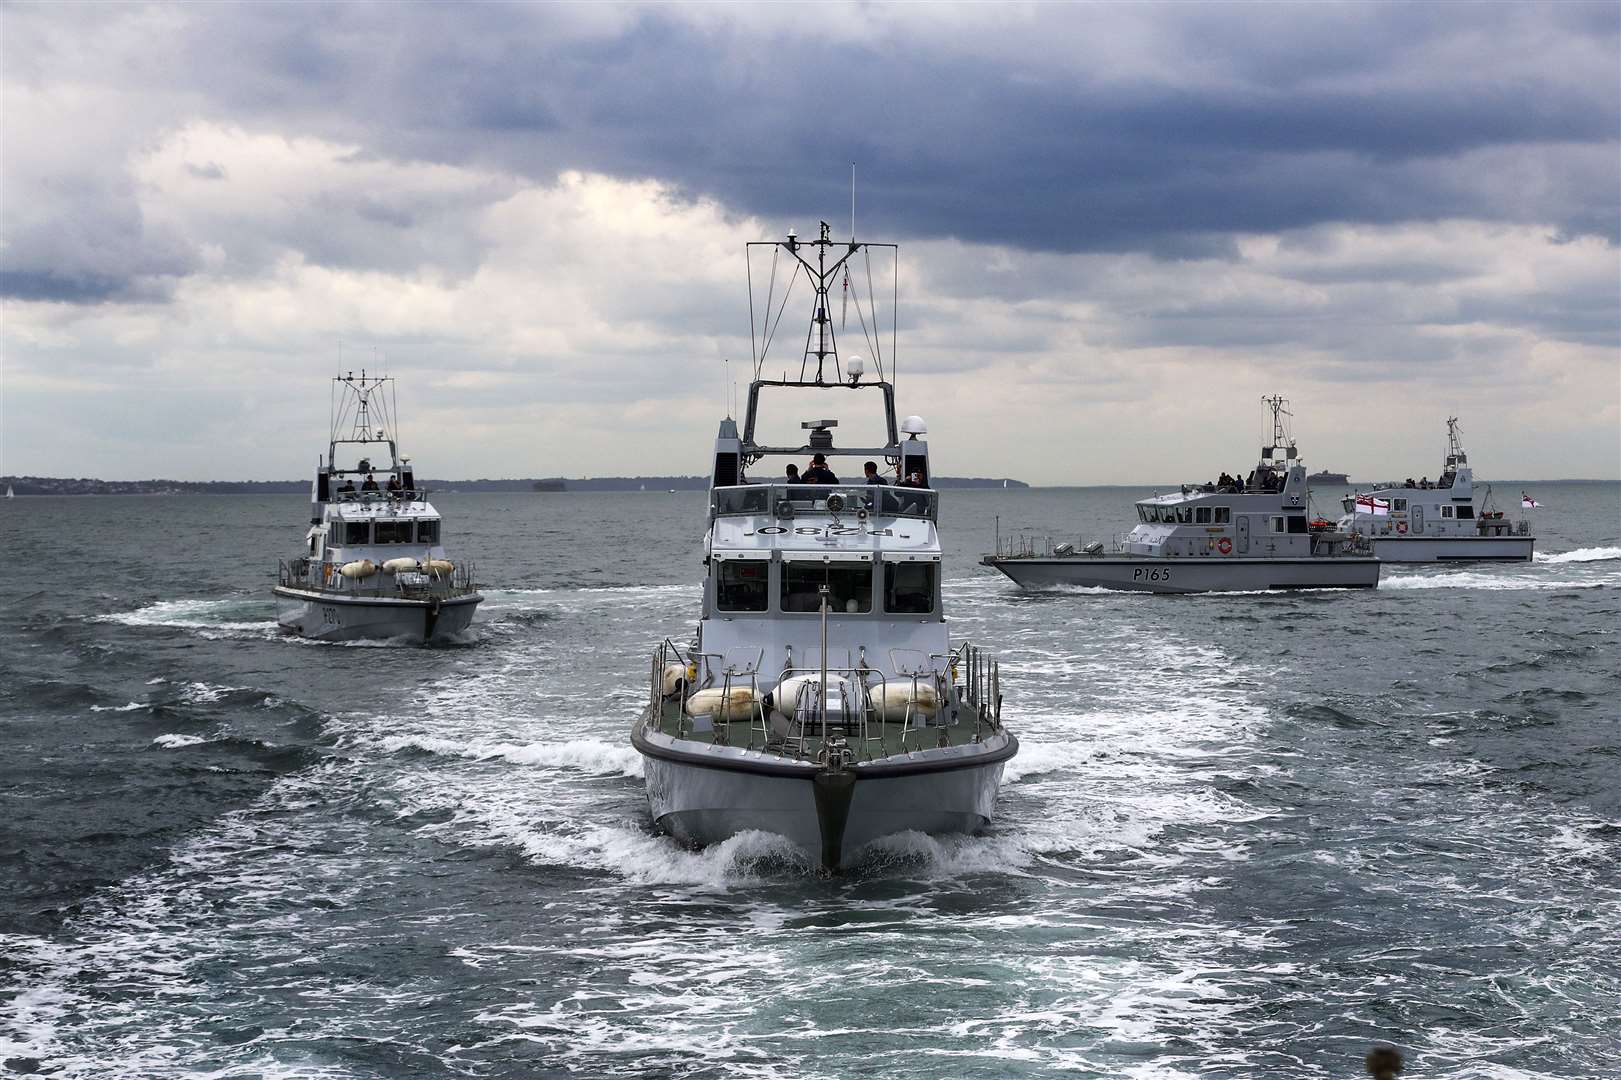 Four Archer class patrol vessels at sea.